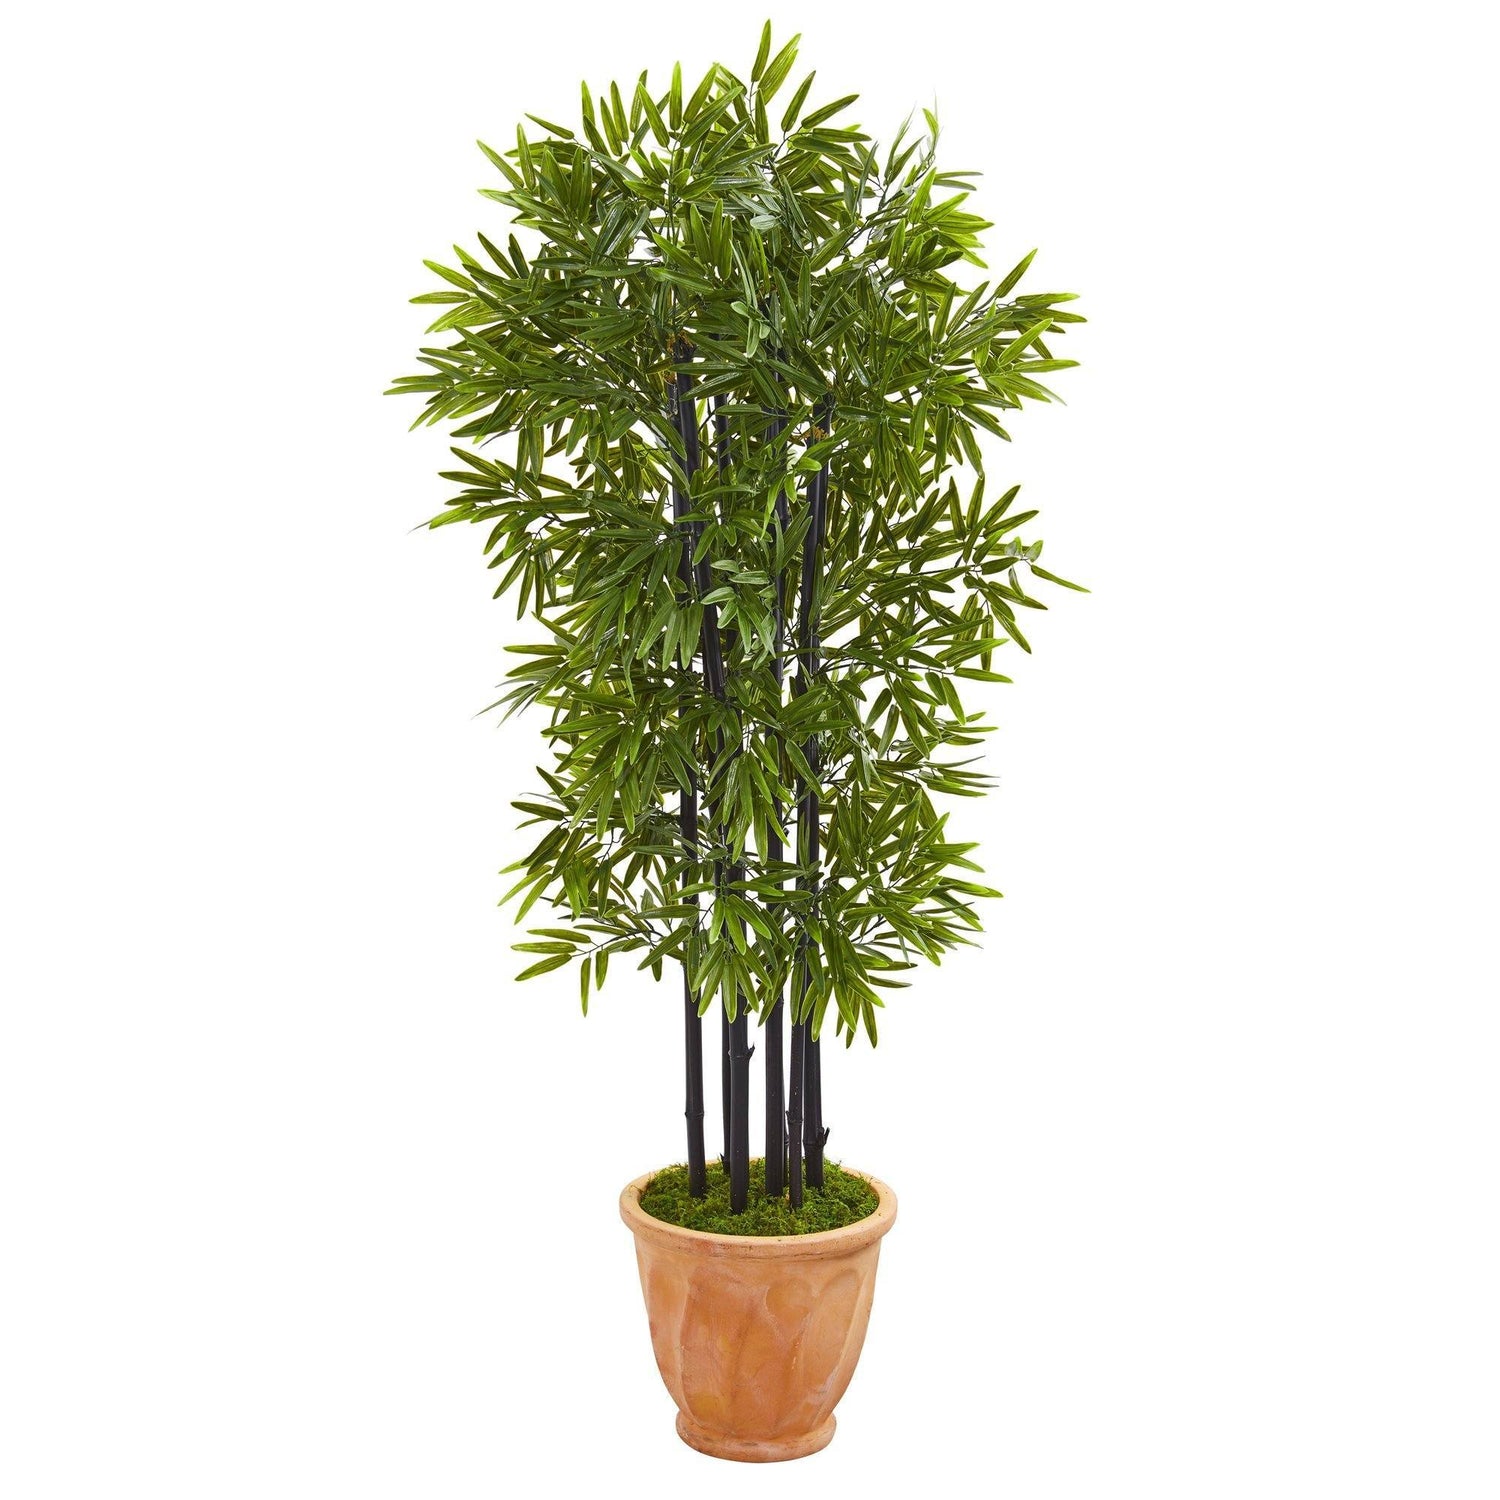 5’ Bamboo Artificial Tree with Black Trunks in Terra-cotta Planter (Indoor/Outdoor)